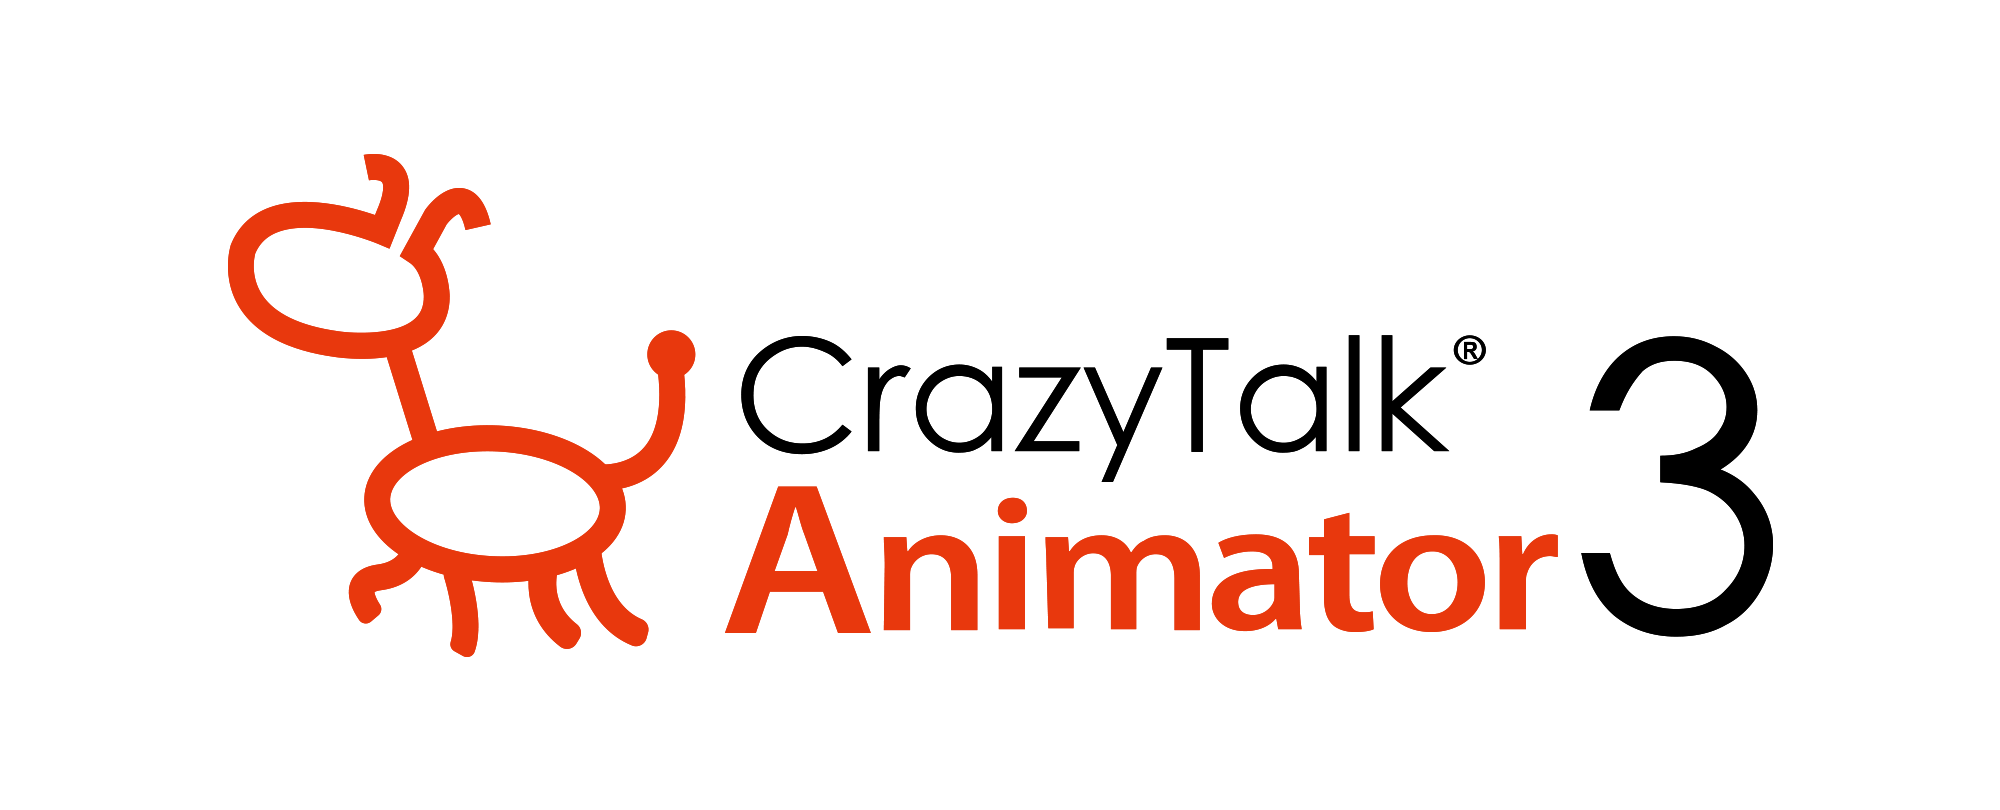 Crazytalk animator pro download